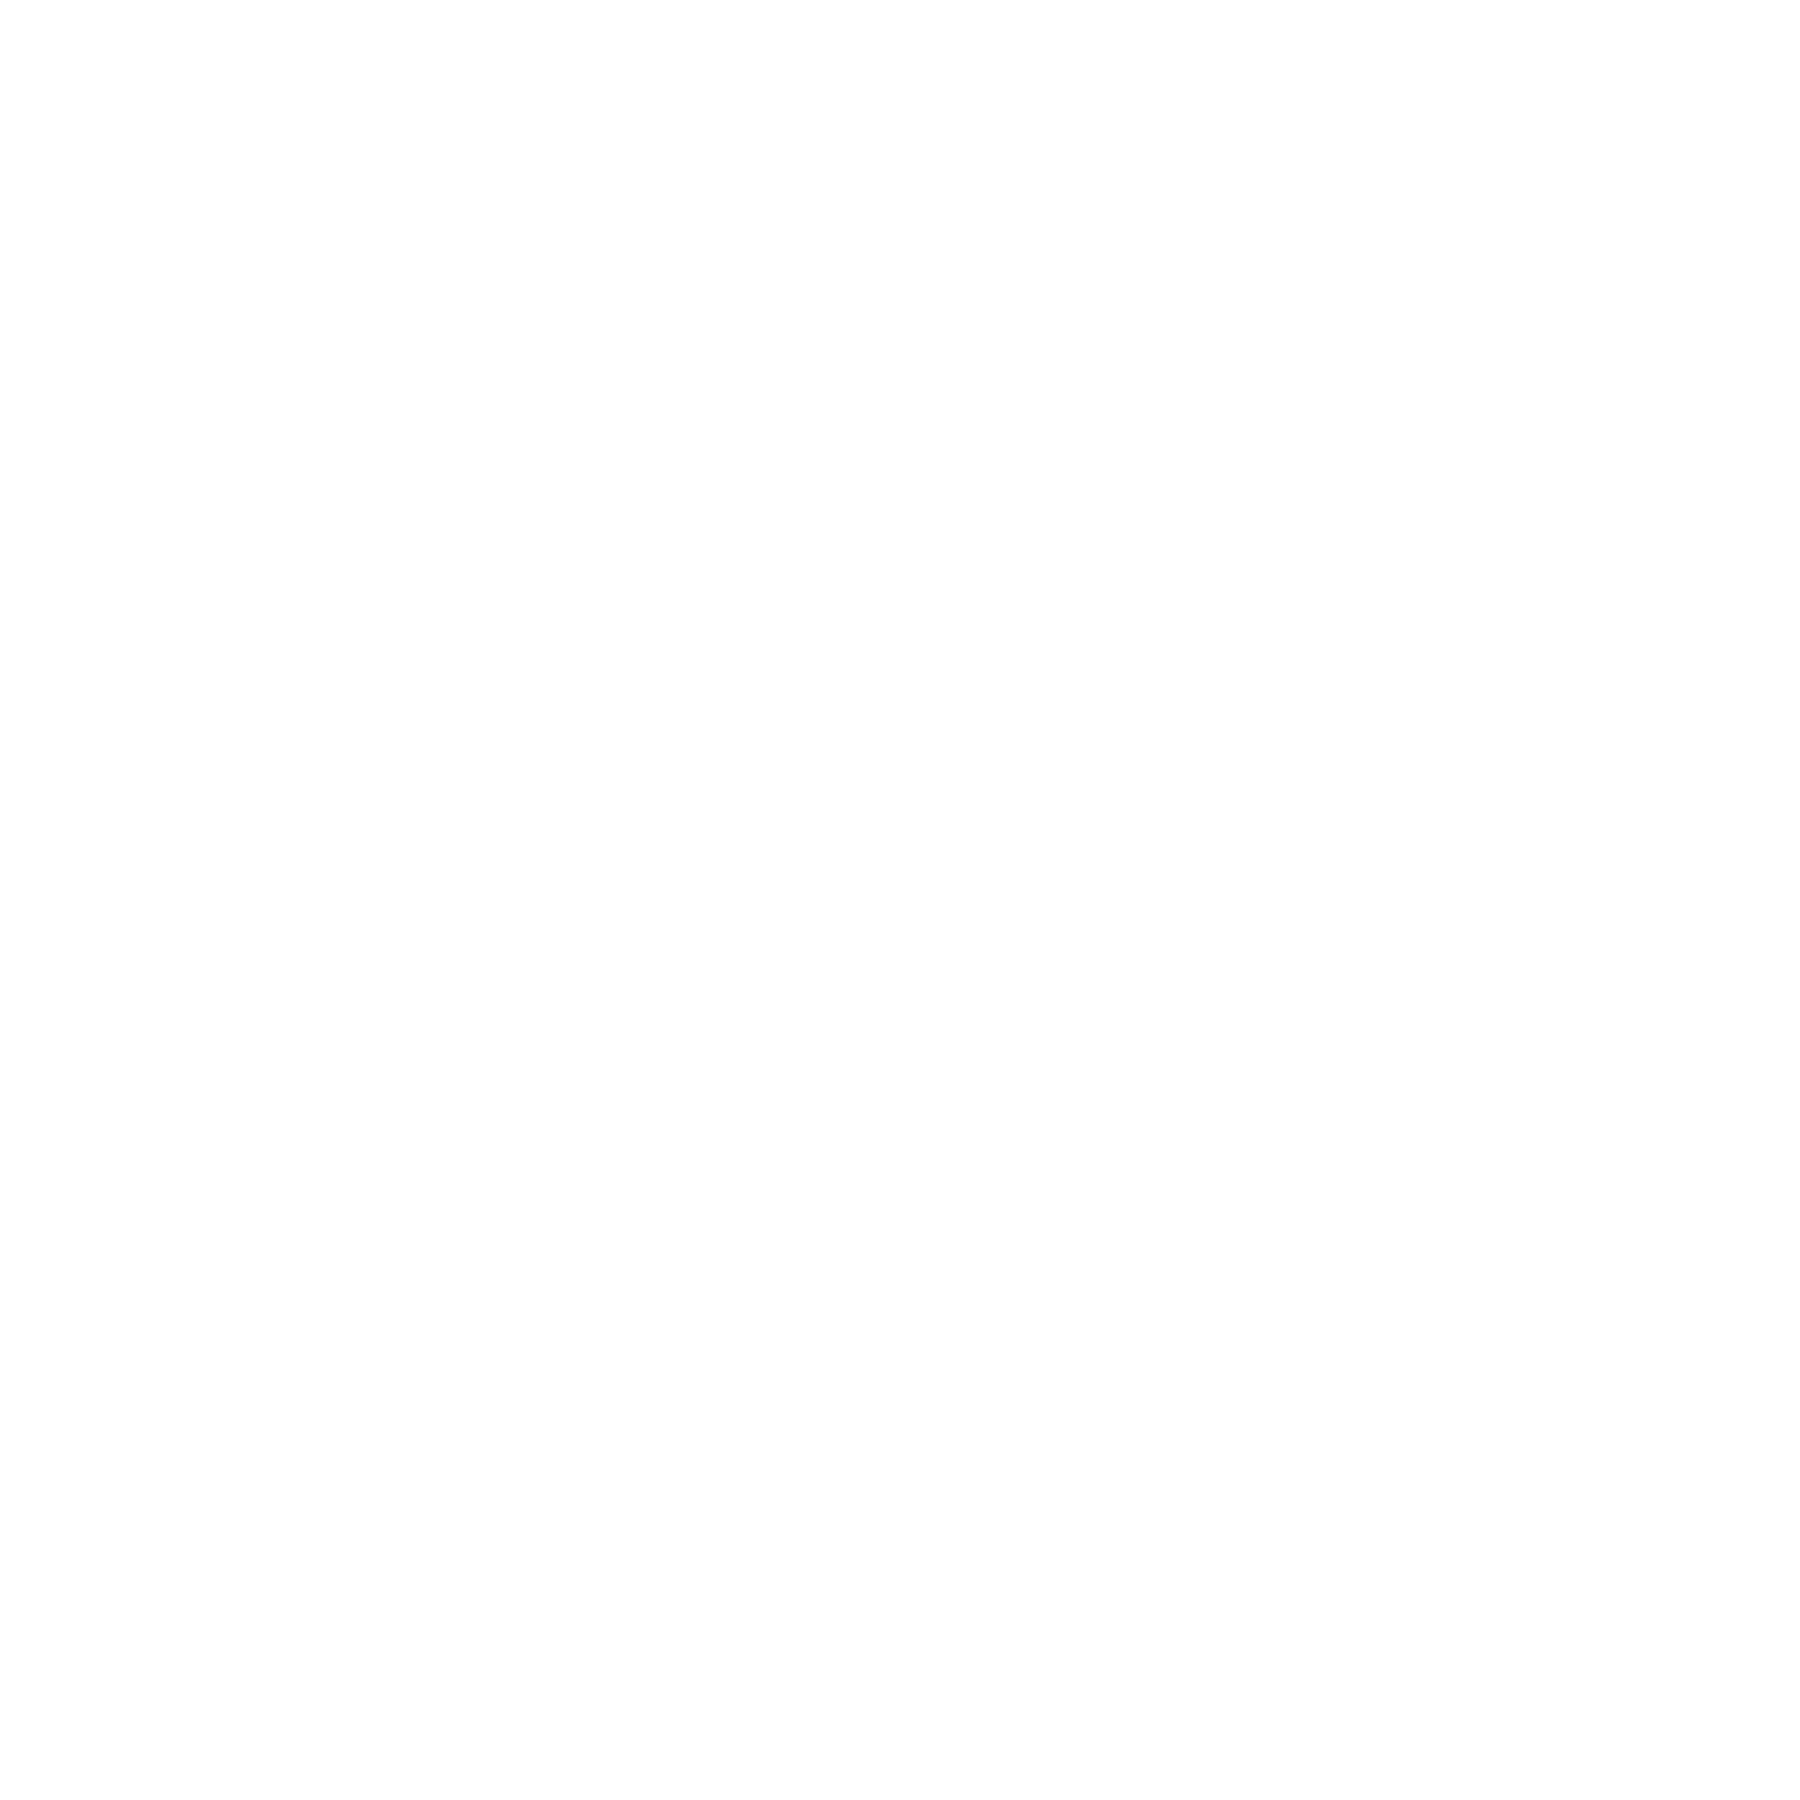 Kenosha Unified School District